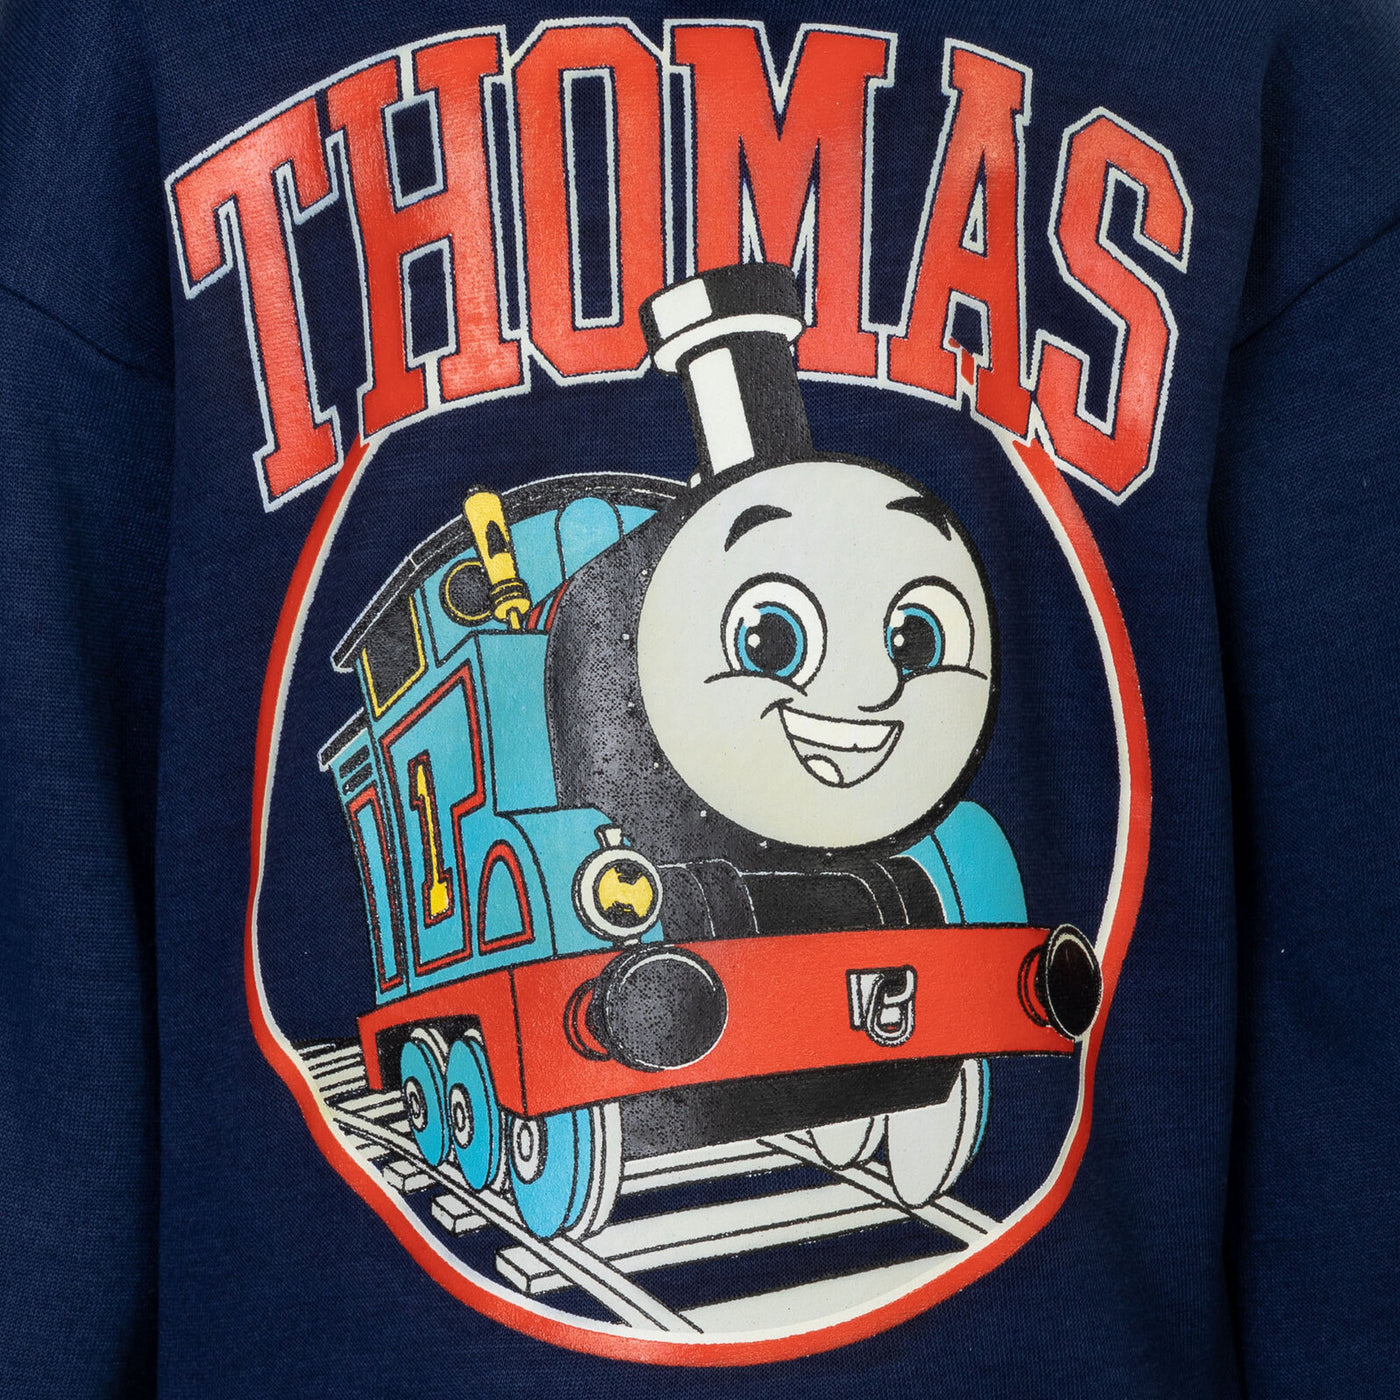 Thomas & Friends Fleece Pullover Hoodie